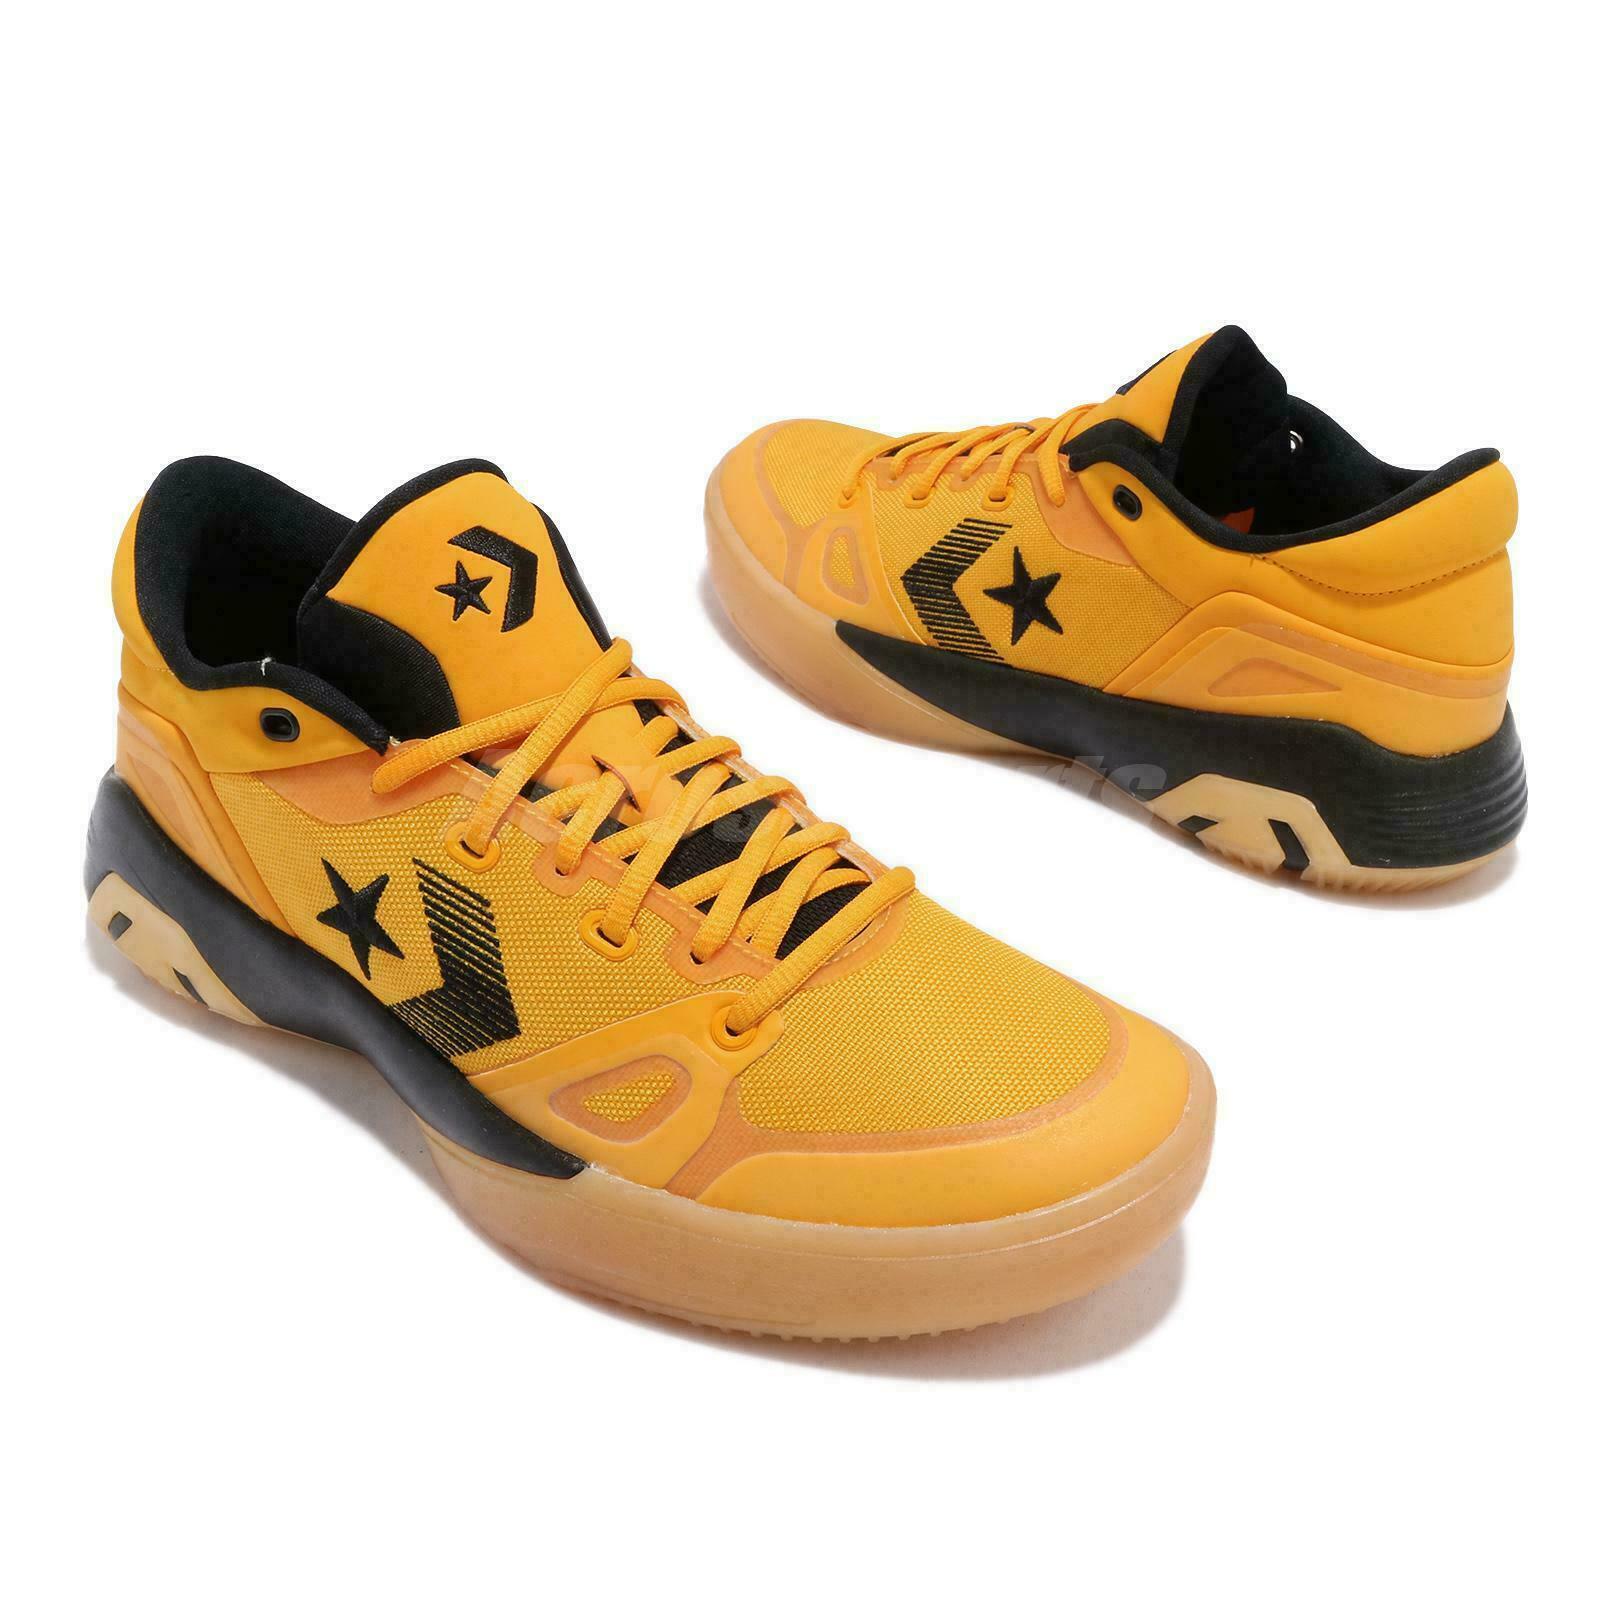 Converse G4 Draymond Green Hyper Swarm Yellow Men Basketball Shoes 170909C